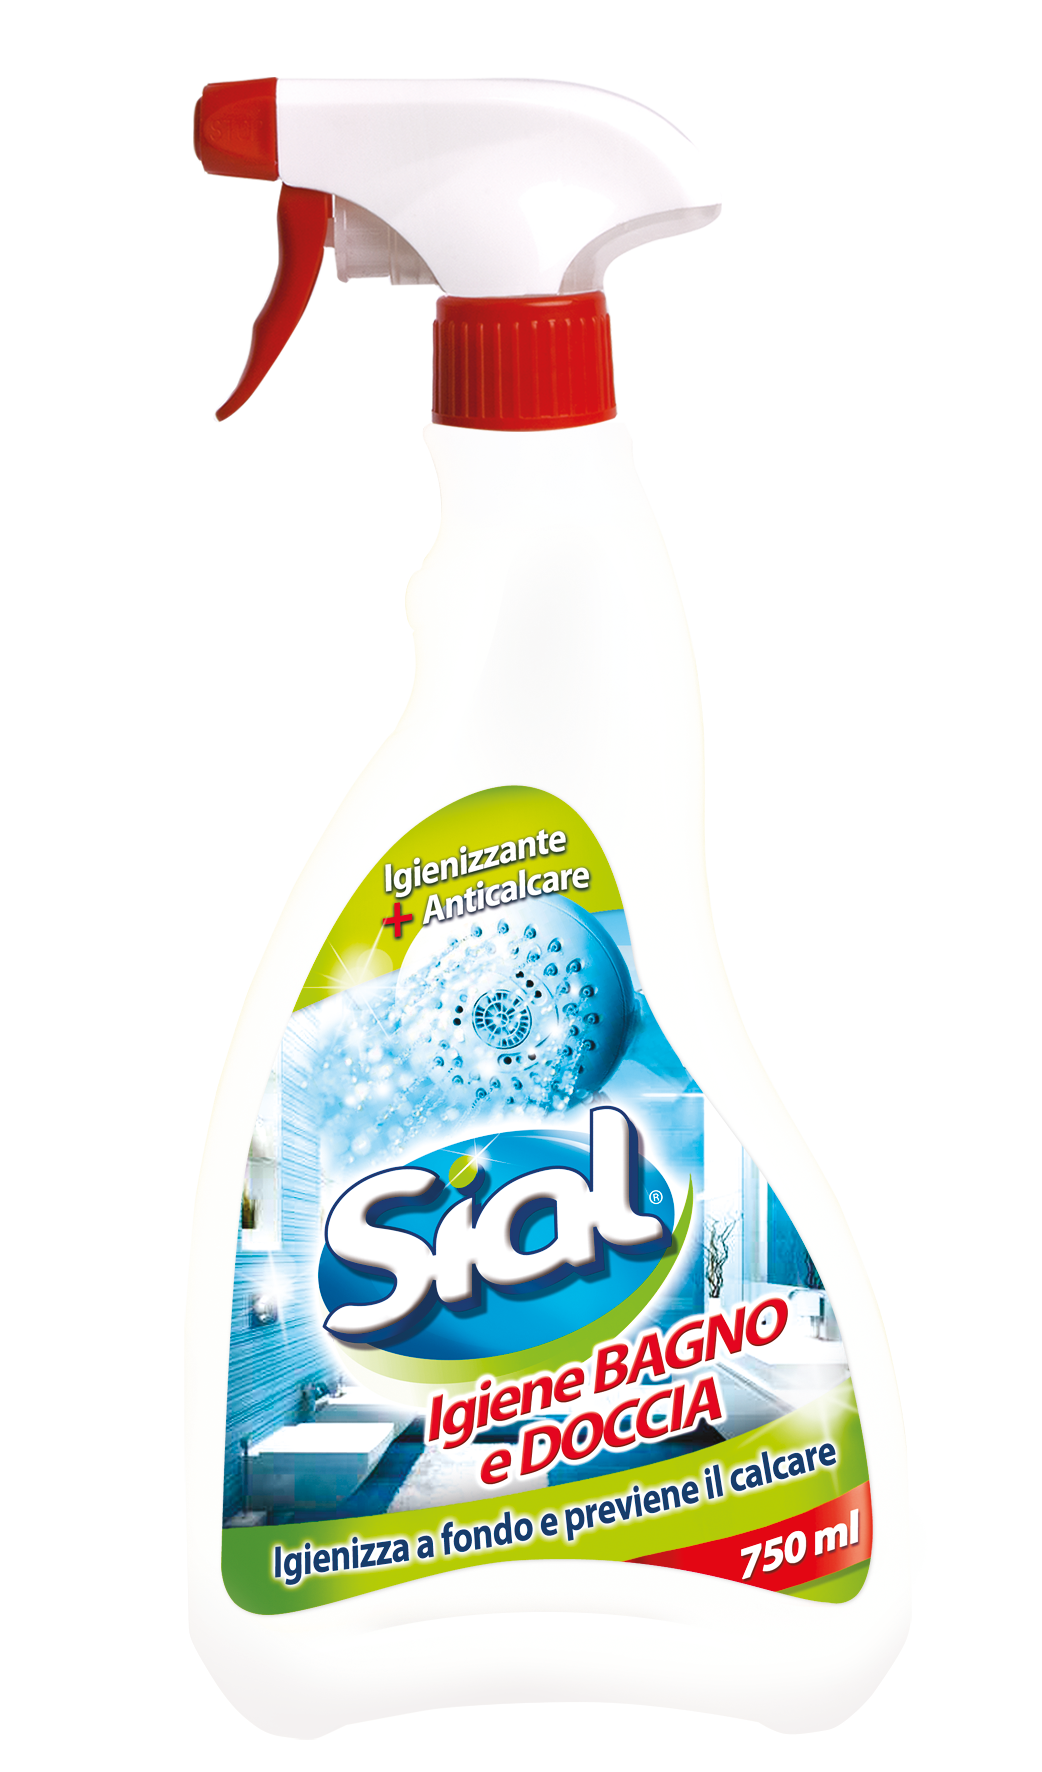 Sial Igiene Bagno e Doccia 750 ml